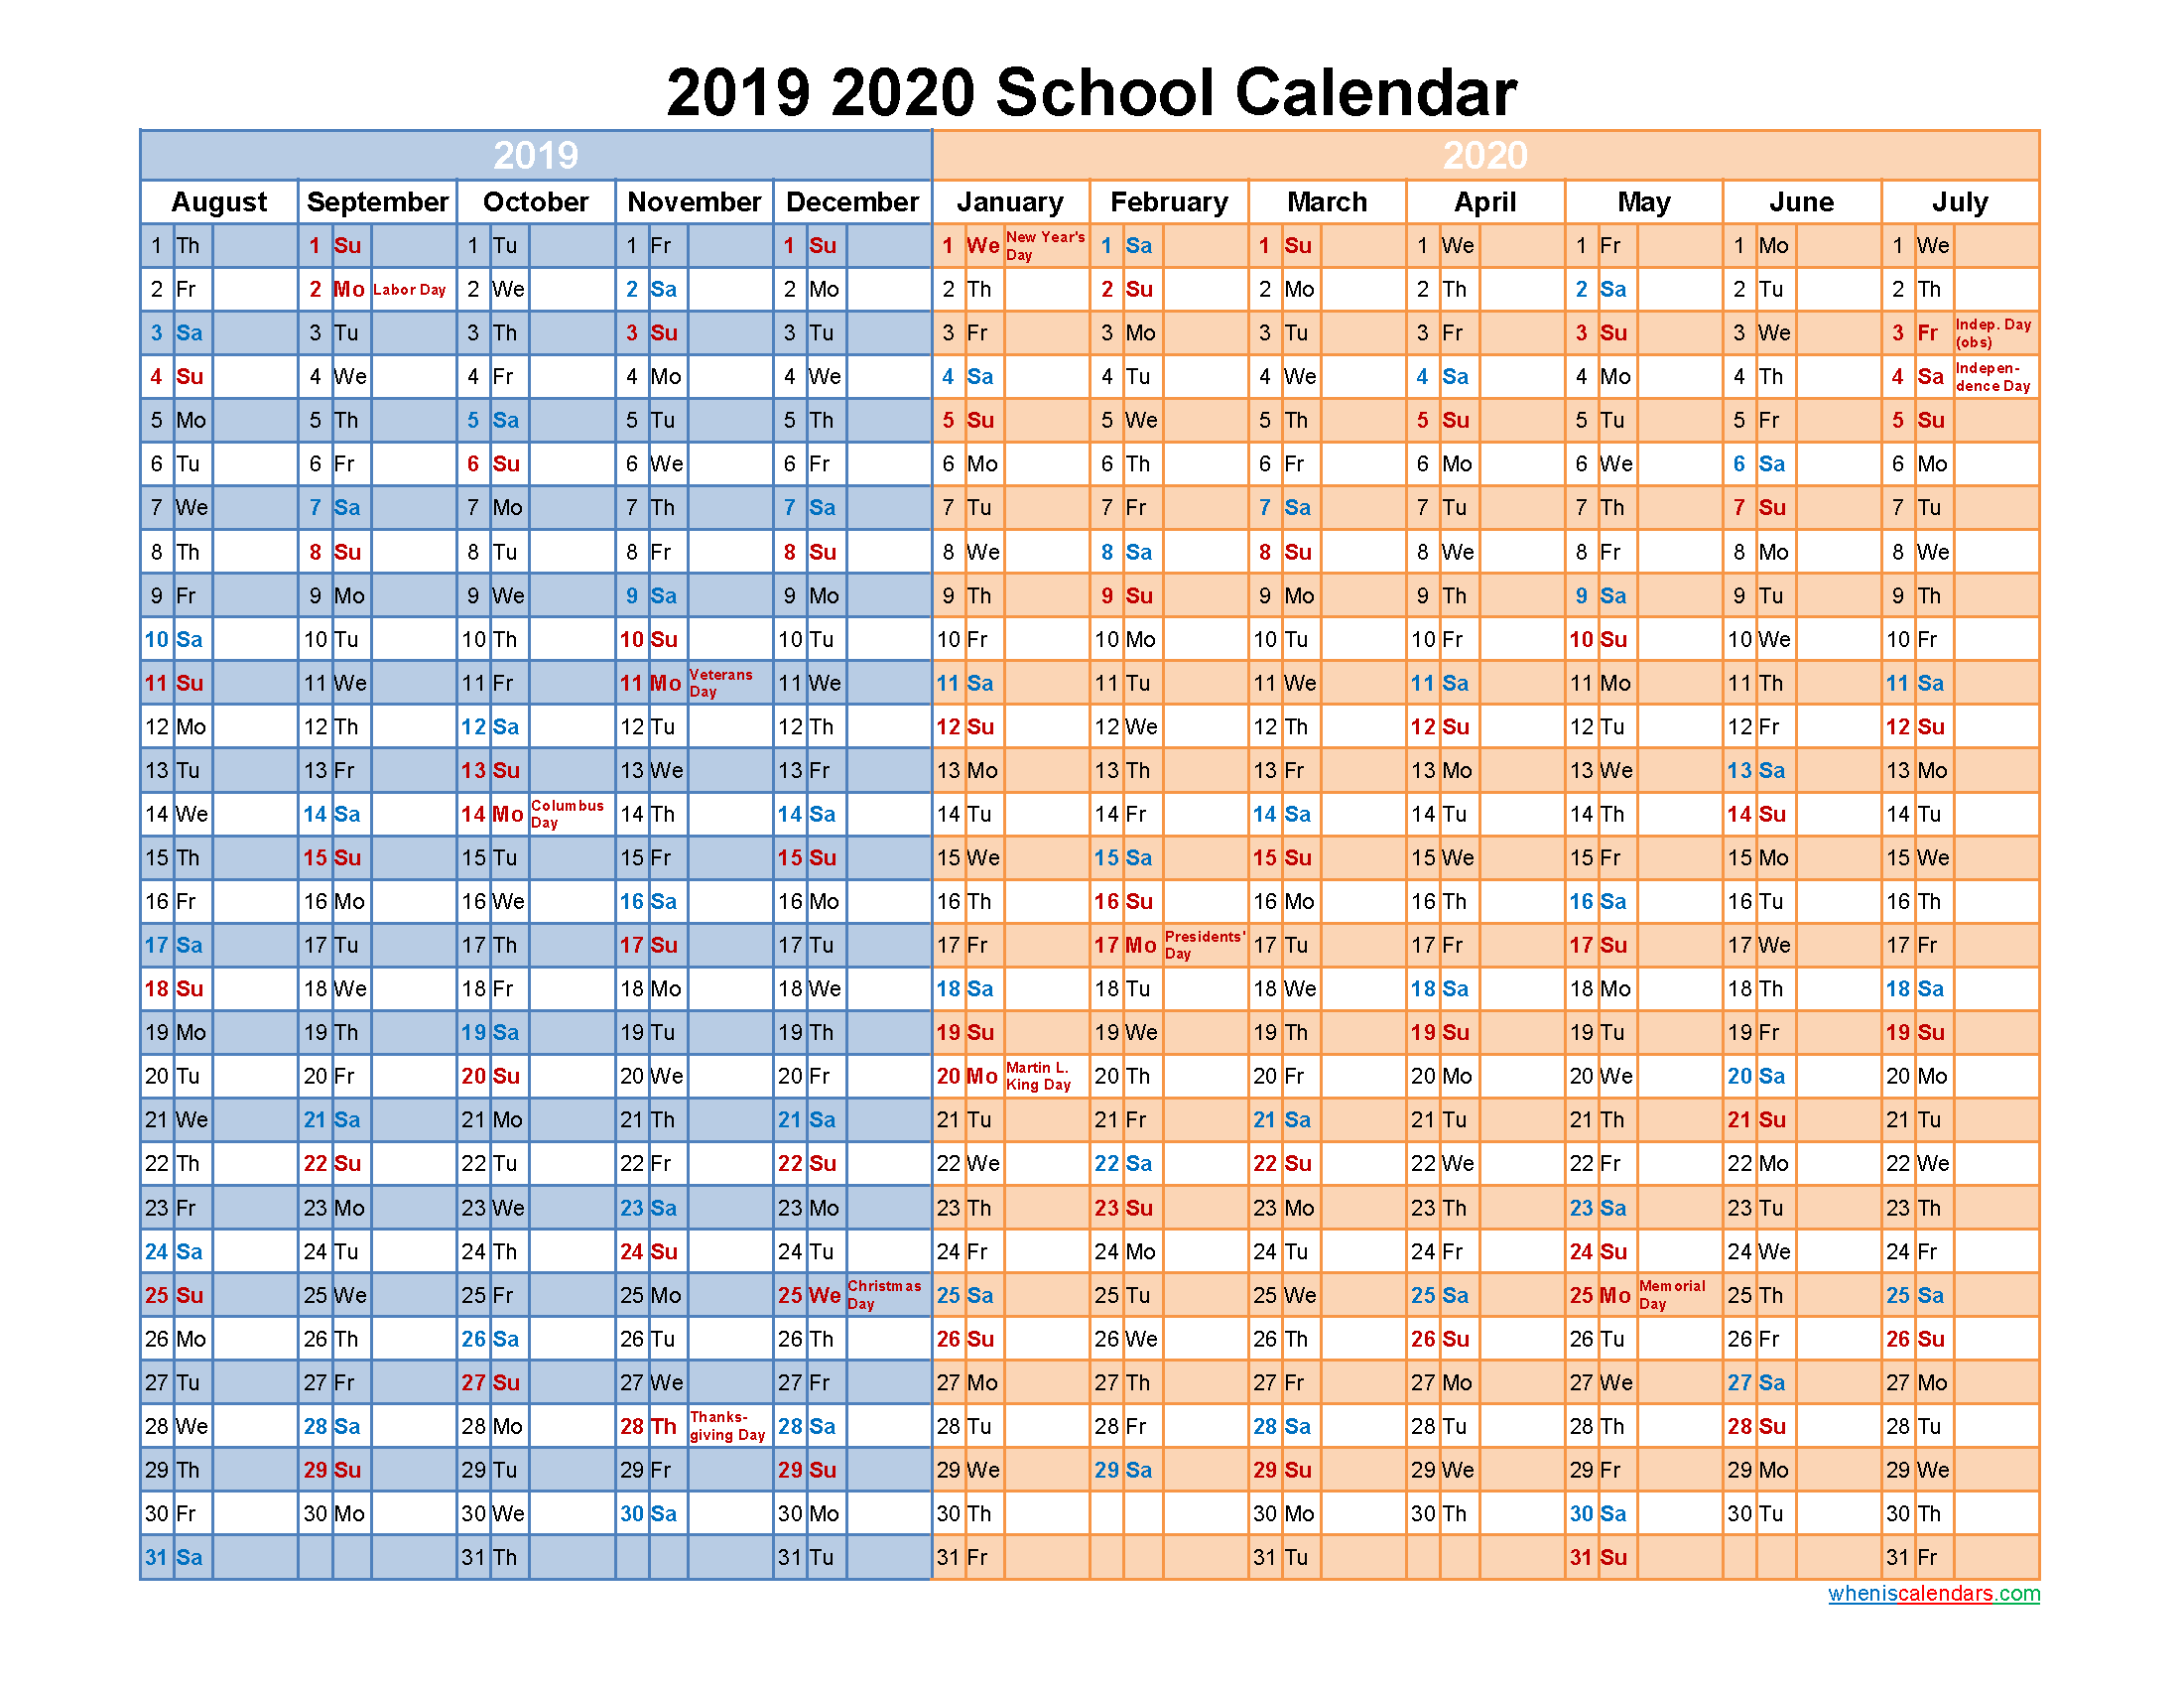 2019 and 2020 School Calendar Printable - Template No.20scl57